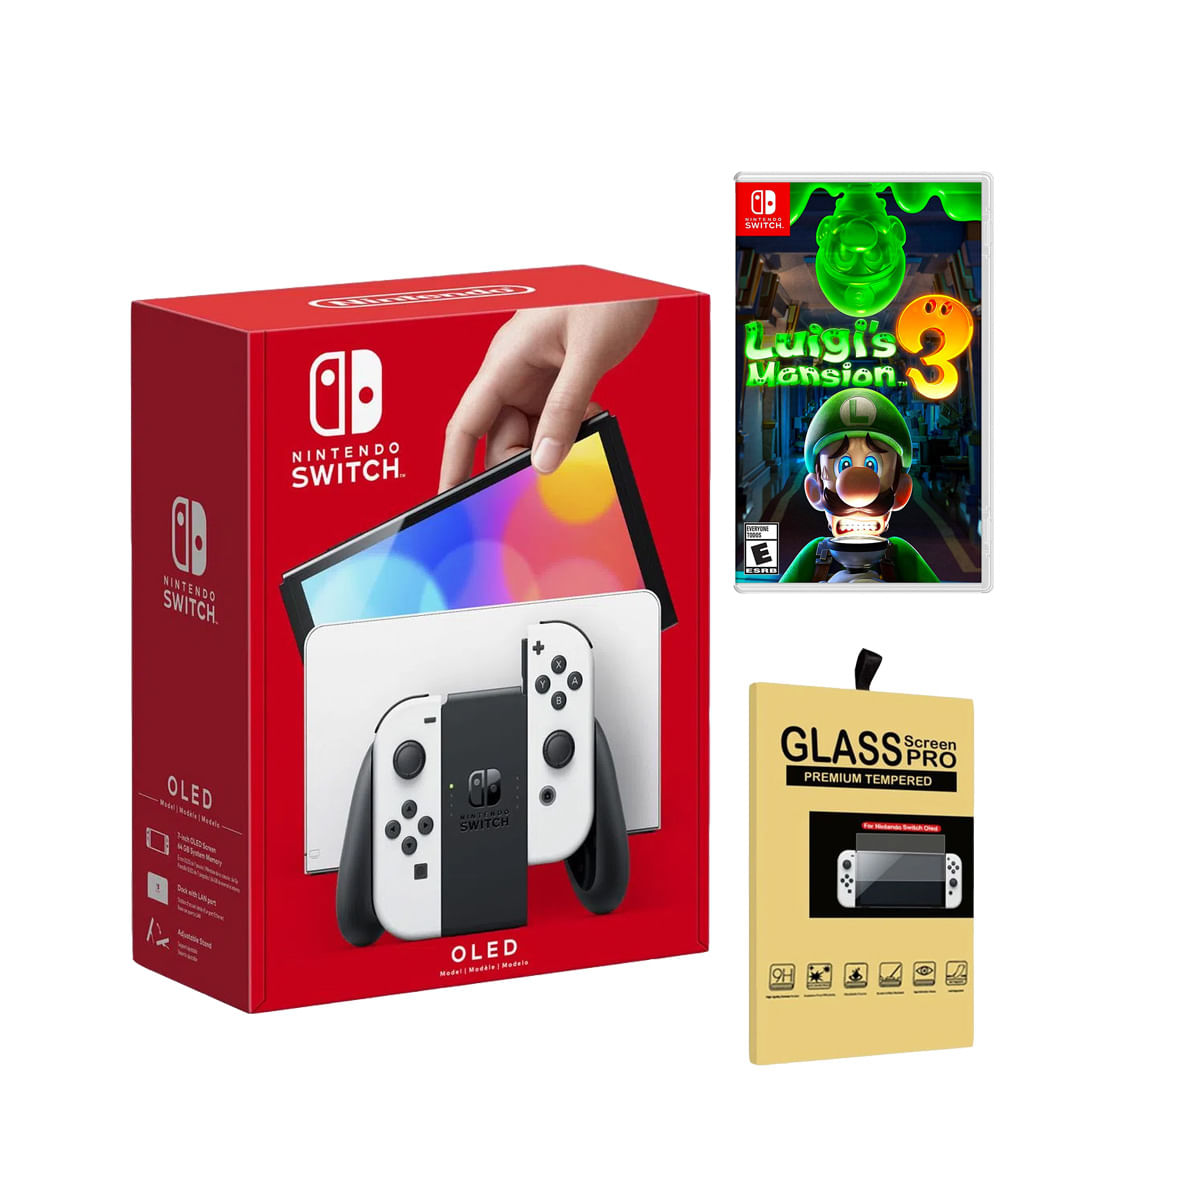 Consola Nintendo Switch Oled Blanco + Luigis Mansion 3 + Mica